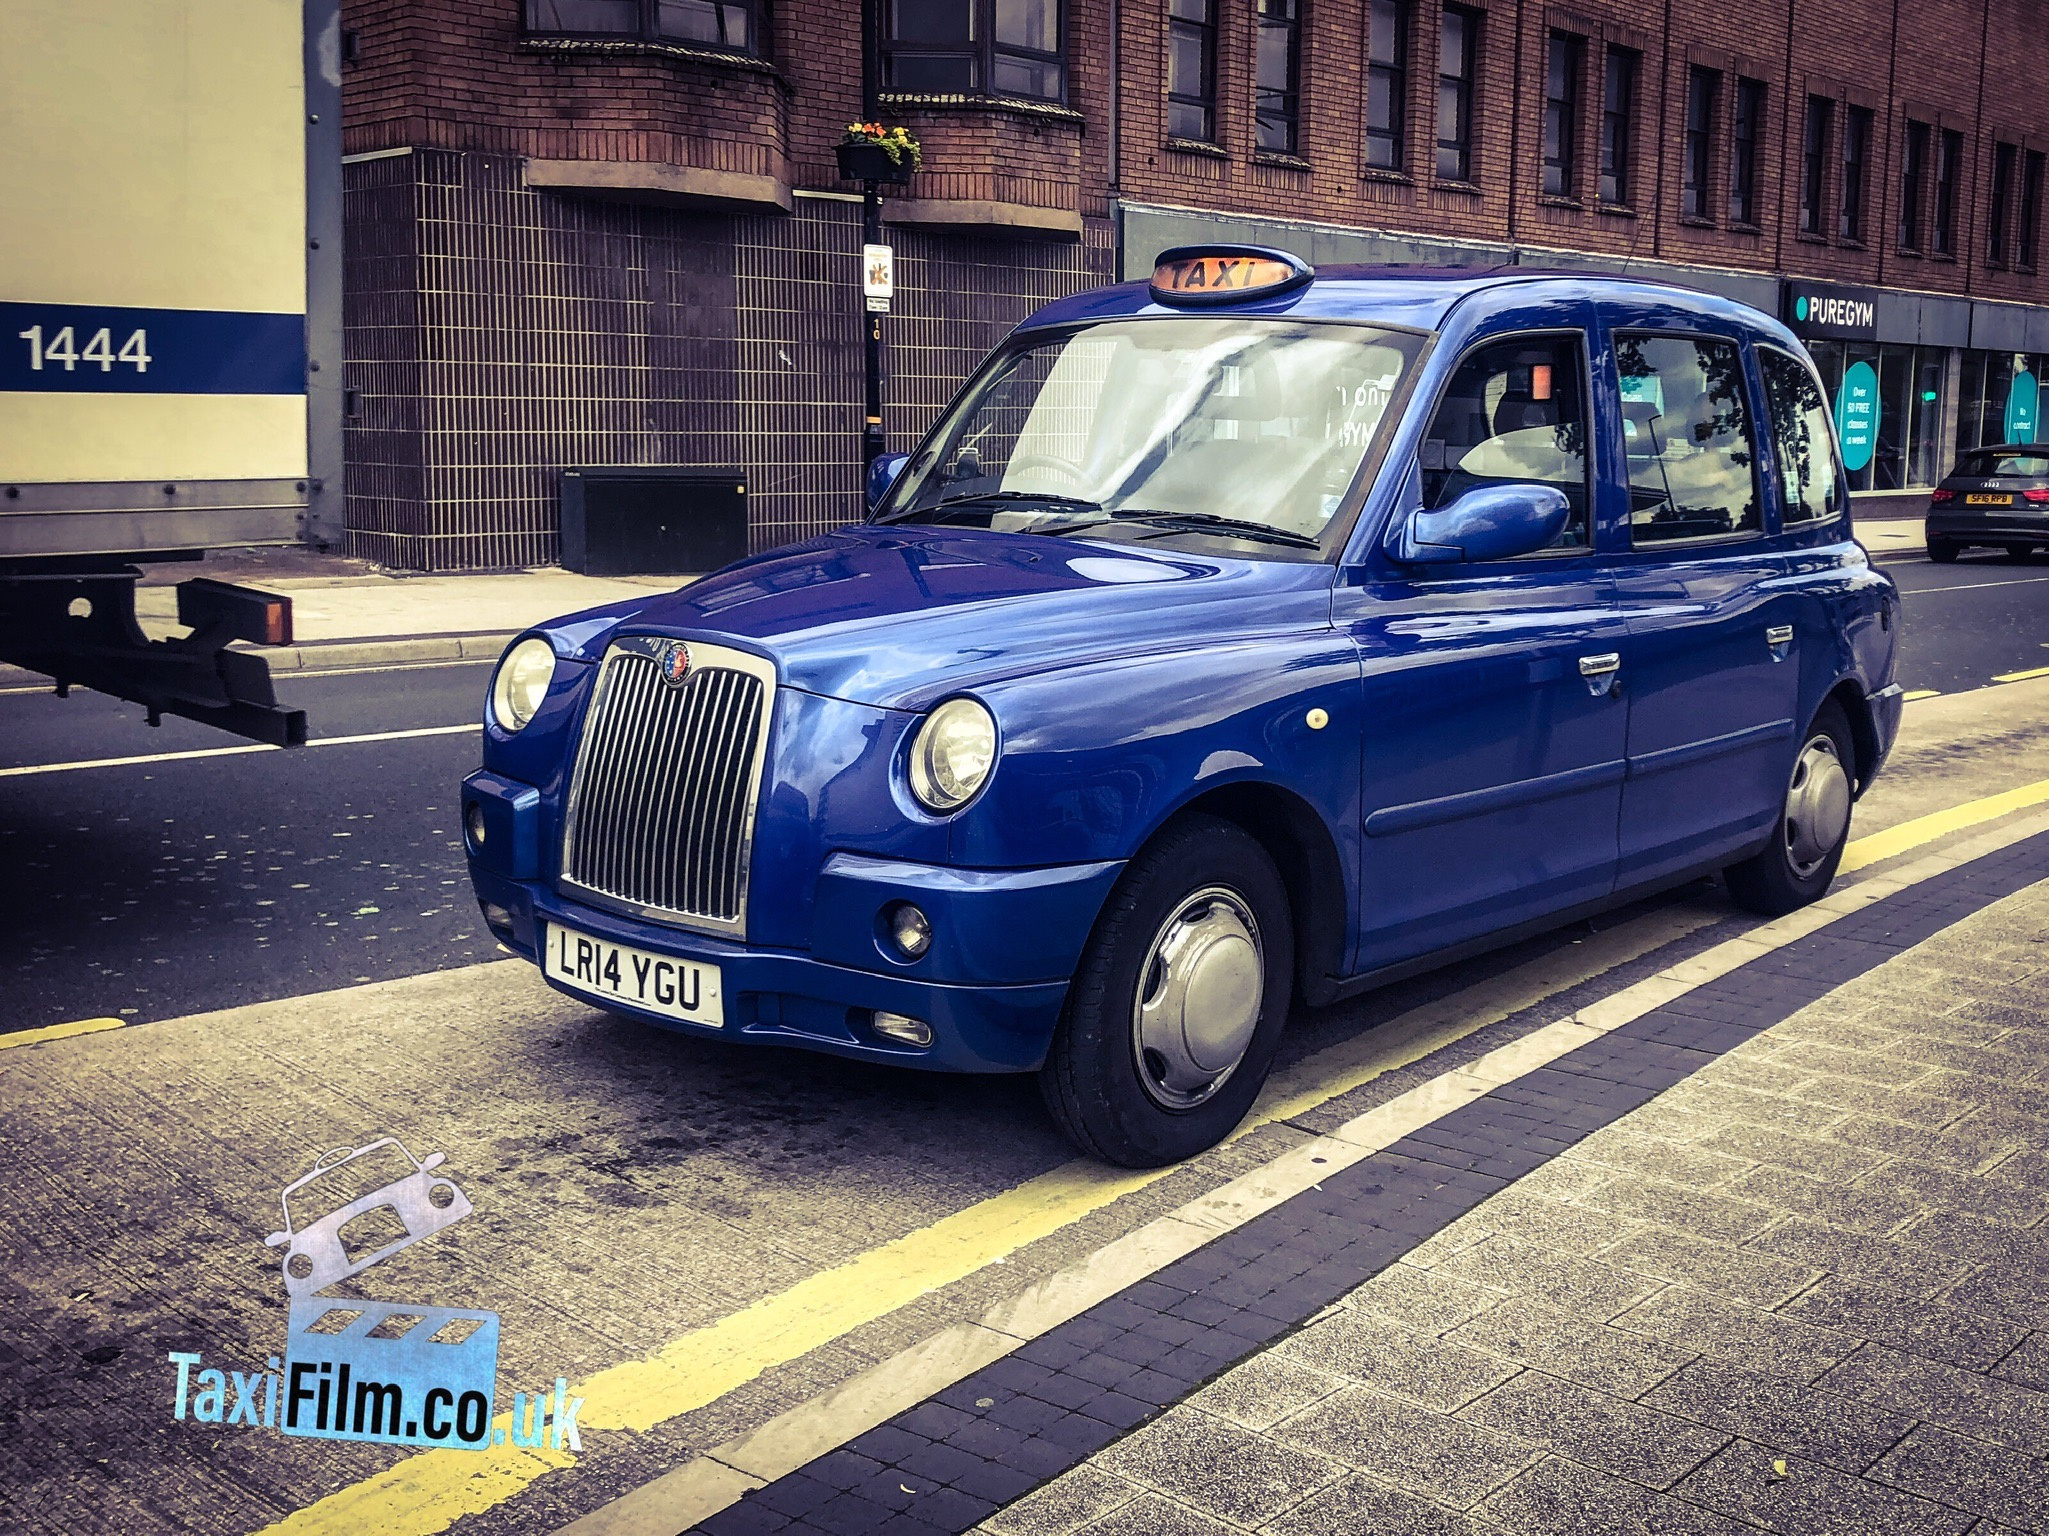 Blue Tx4 Taxi, 2014, Manchester
ref M0004